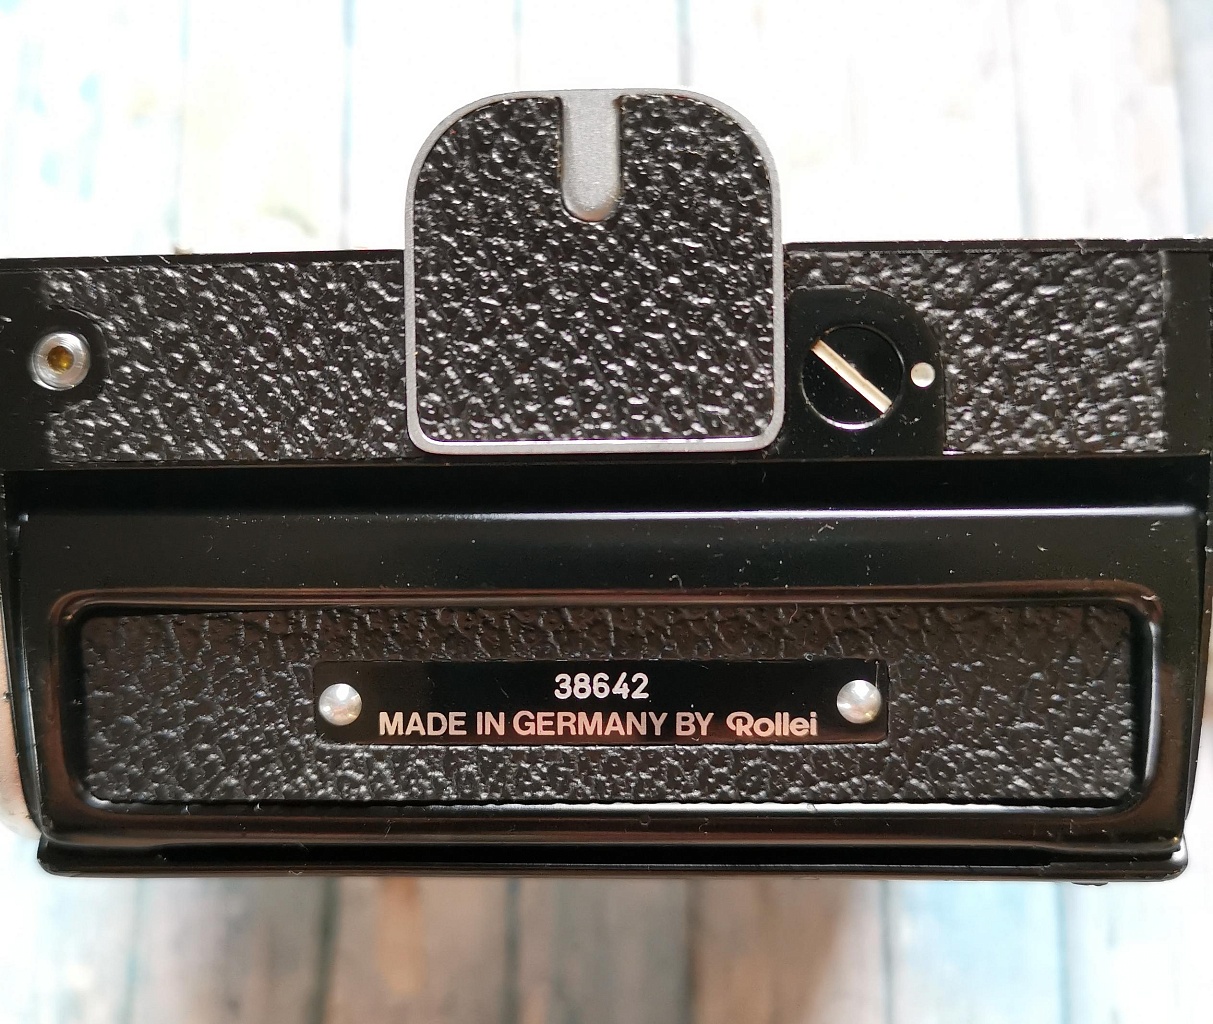 Задник для Rolleiflex SL66 (снимок 6x4.5) (2) фото №3